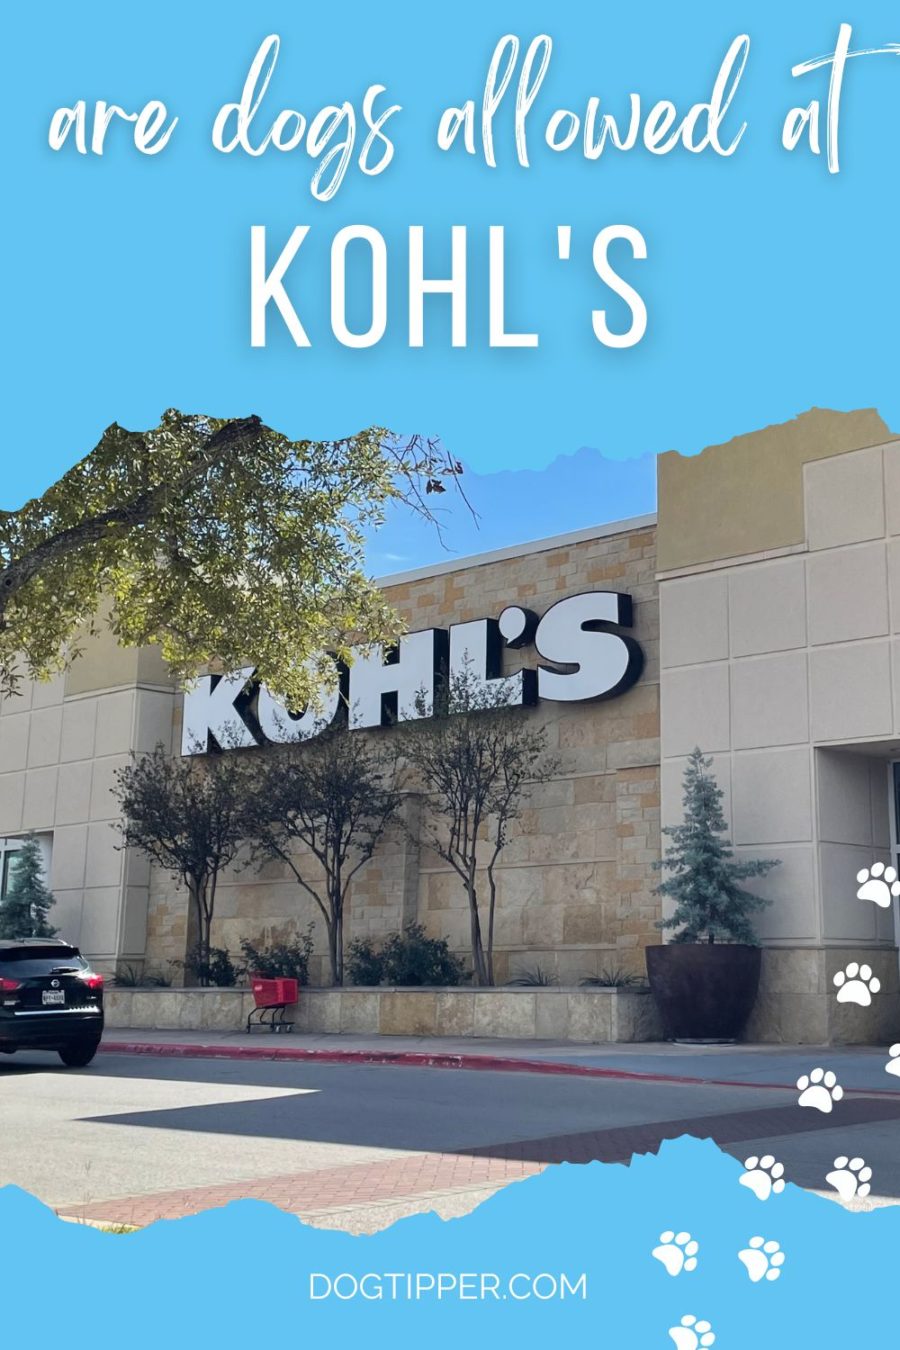 Is Kohl's dog friendly?